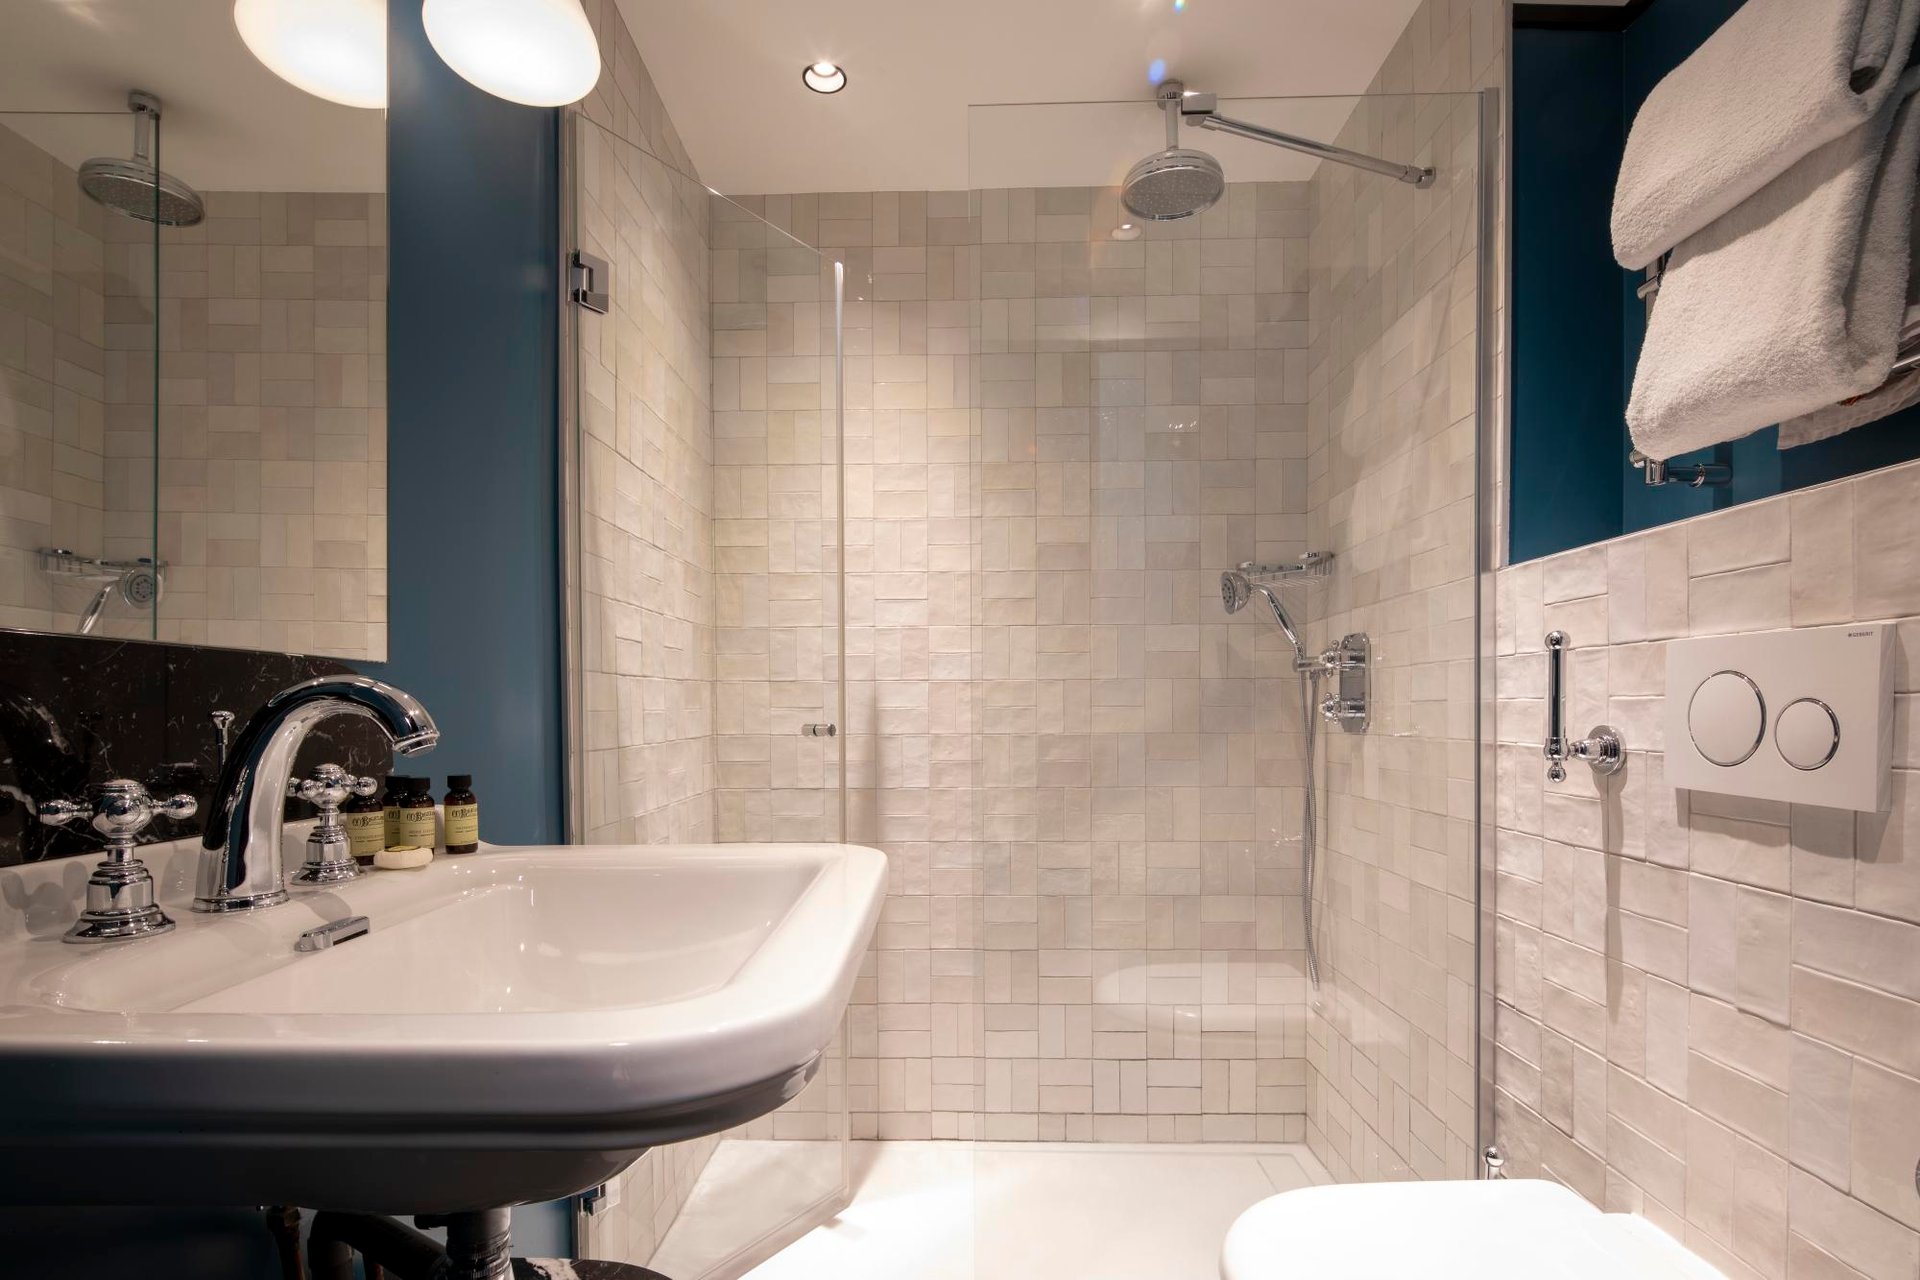 Grand Hotel Chicago Classic Room Bathroom Shower